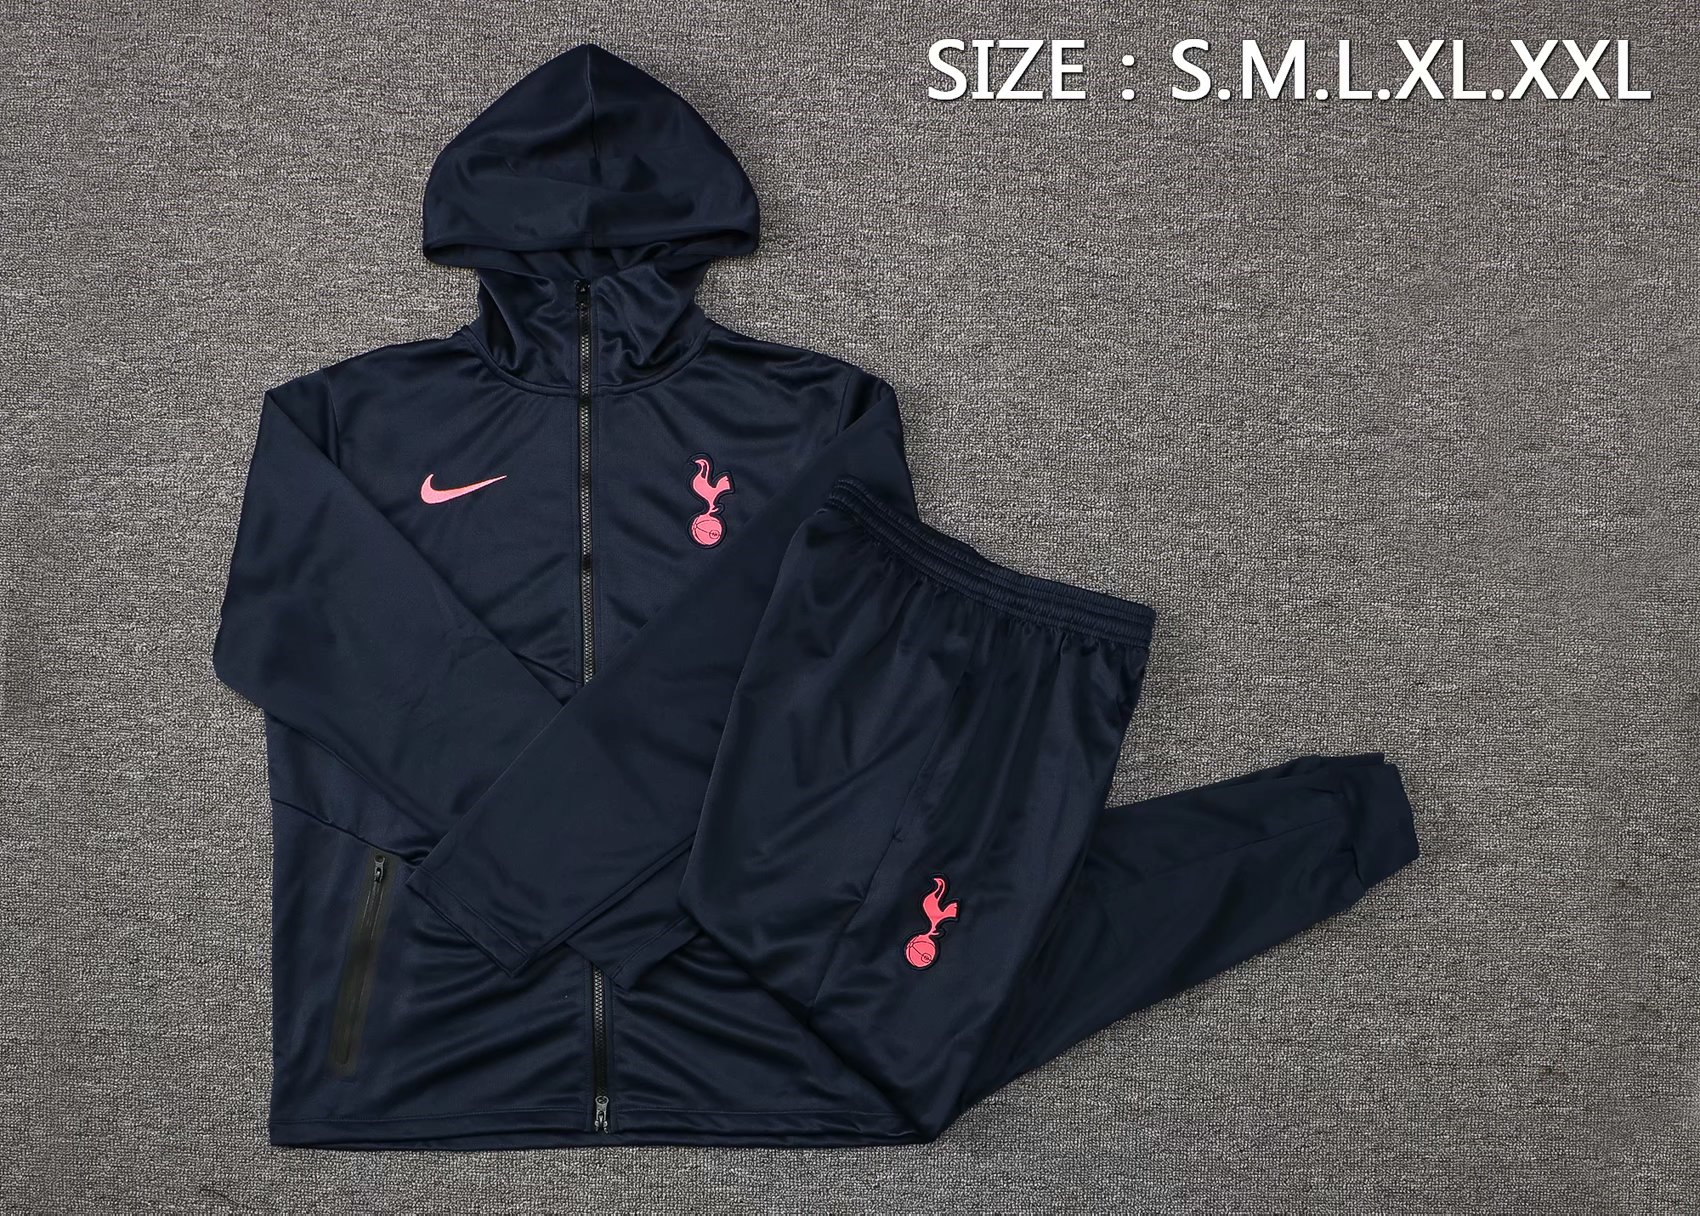 21/22 Tottenham Hotspur Hoodie Royal Soccer Training Suit(Jacket + Pants) Men's